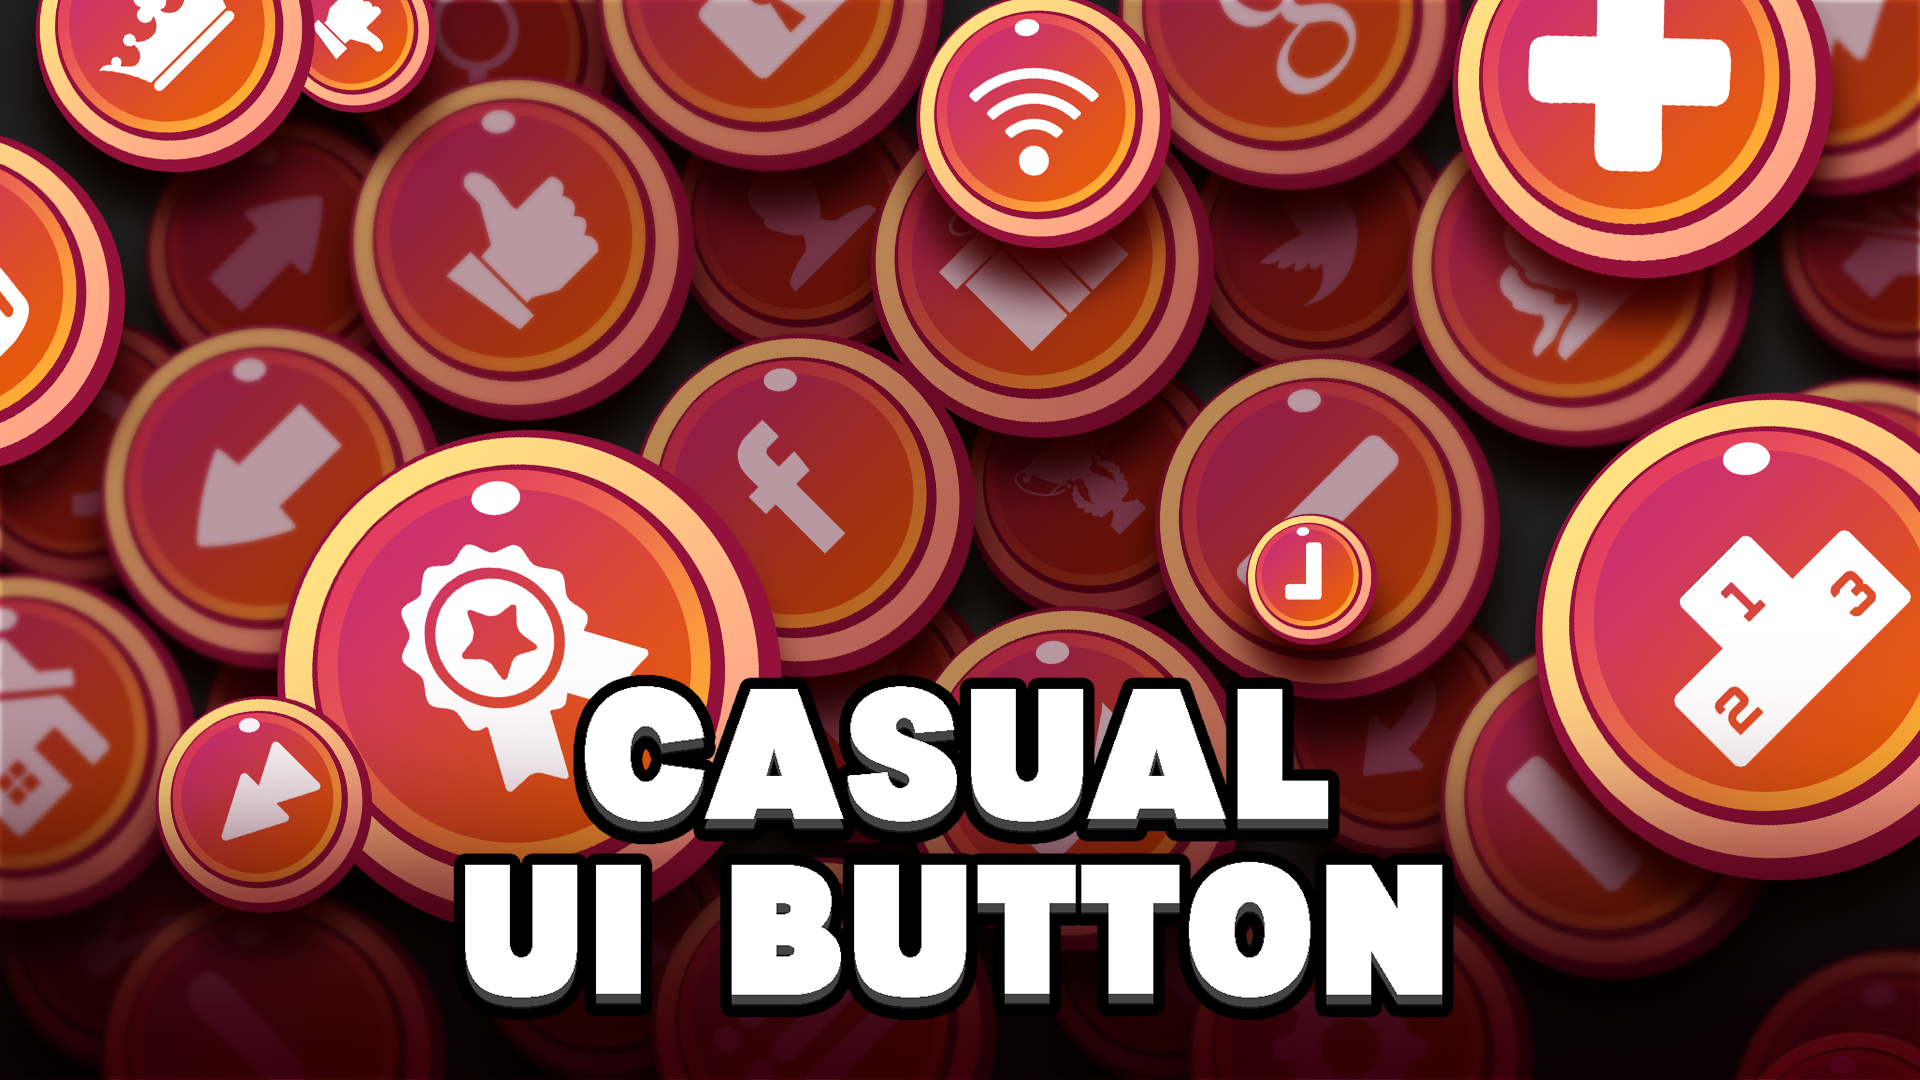 Casual UI Button #13